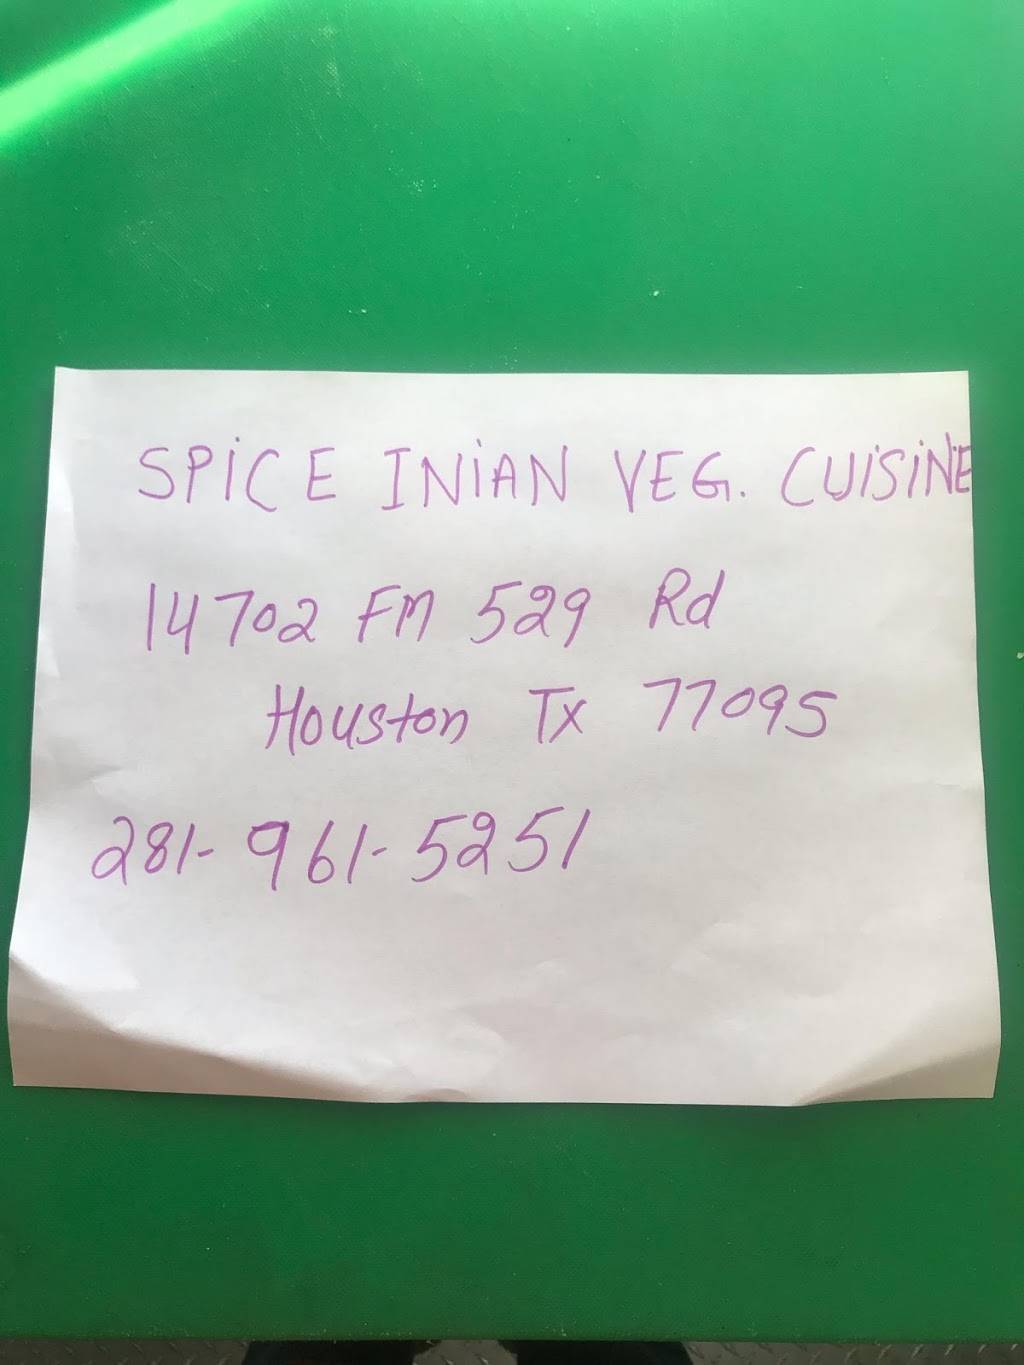 Spice Indian Veg Cuisine Food Truck | 14702 FM 529 road, Houston, TX 77095, USA | Phone: (281) 961-5251